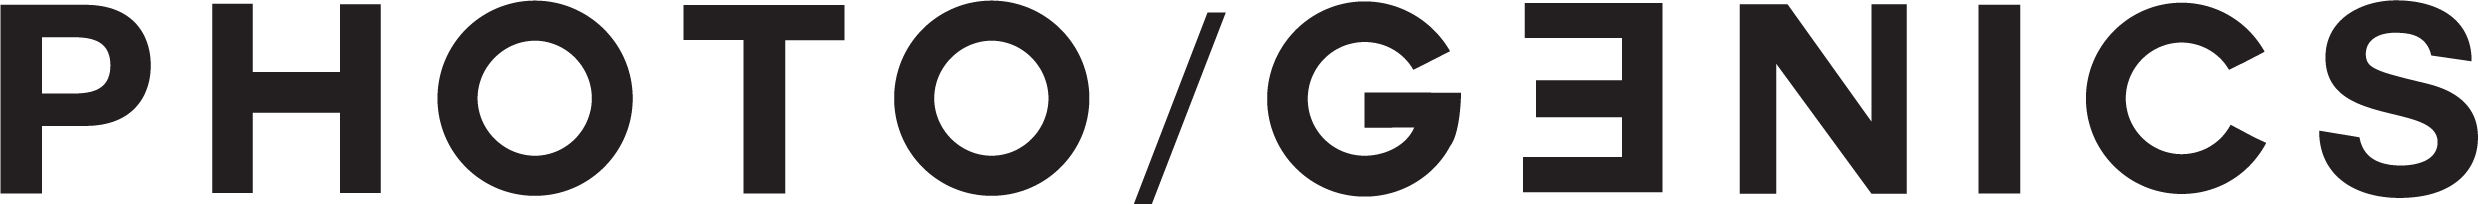 Photogenics - Logo